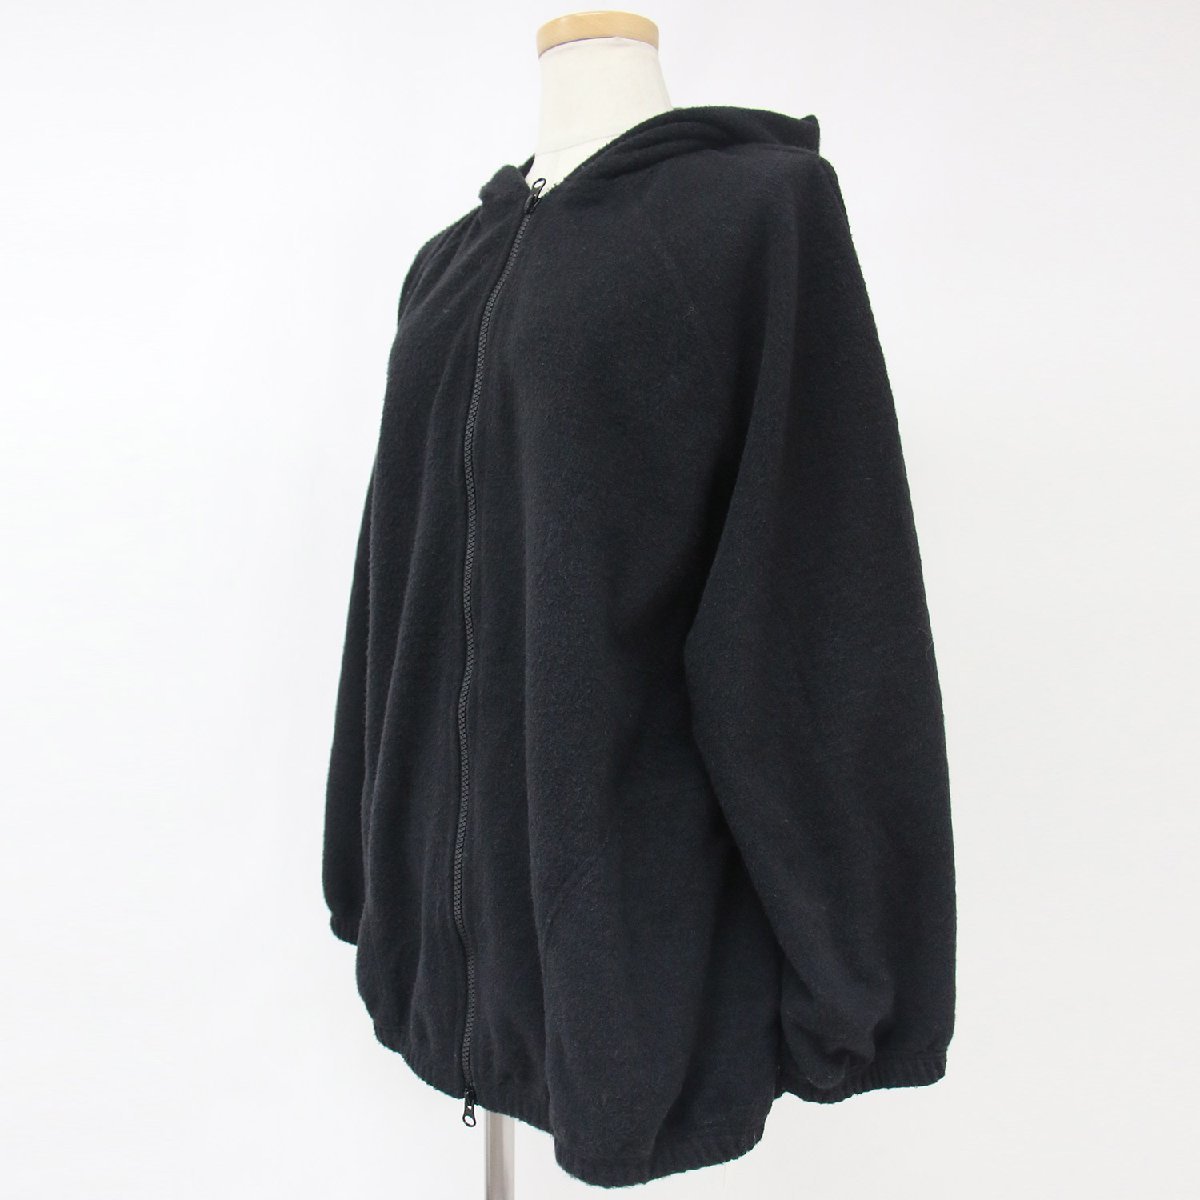 FLORENT Florent Parker size :1(FREE) Zip up fastener hood f-ti- long sleeve fleece rayon black made in Japan 